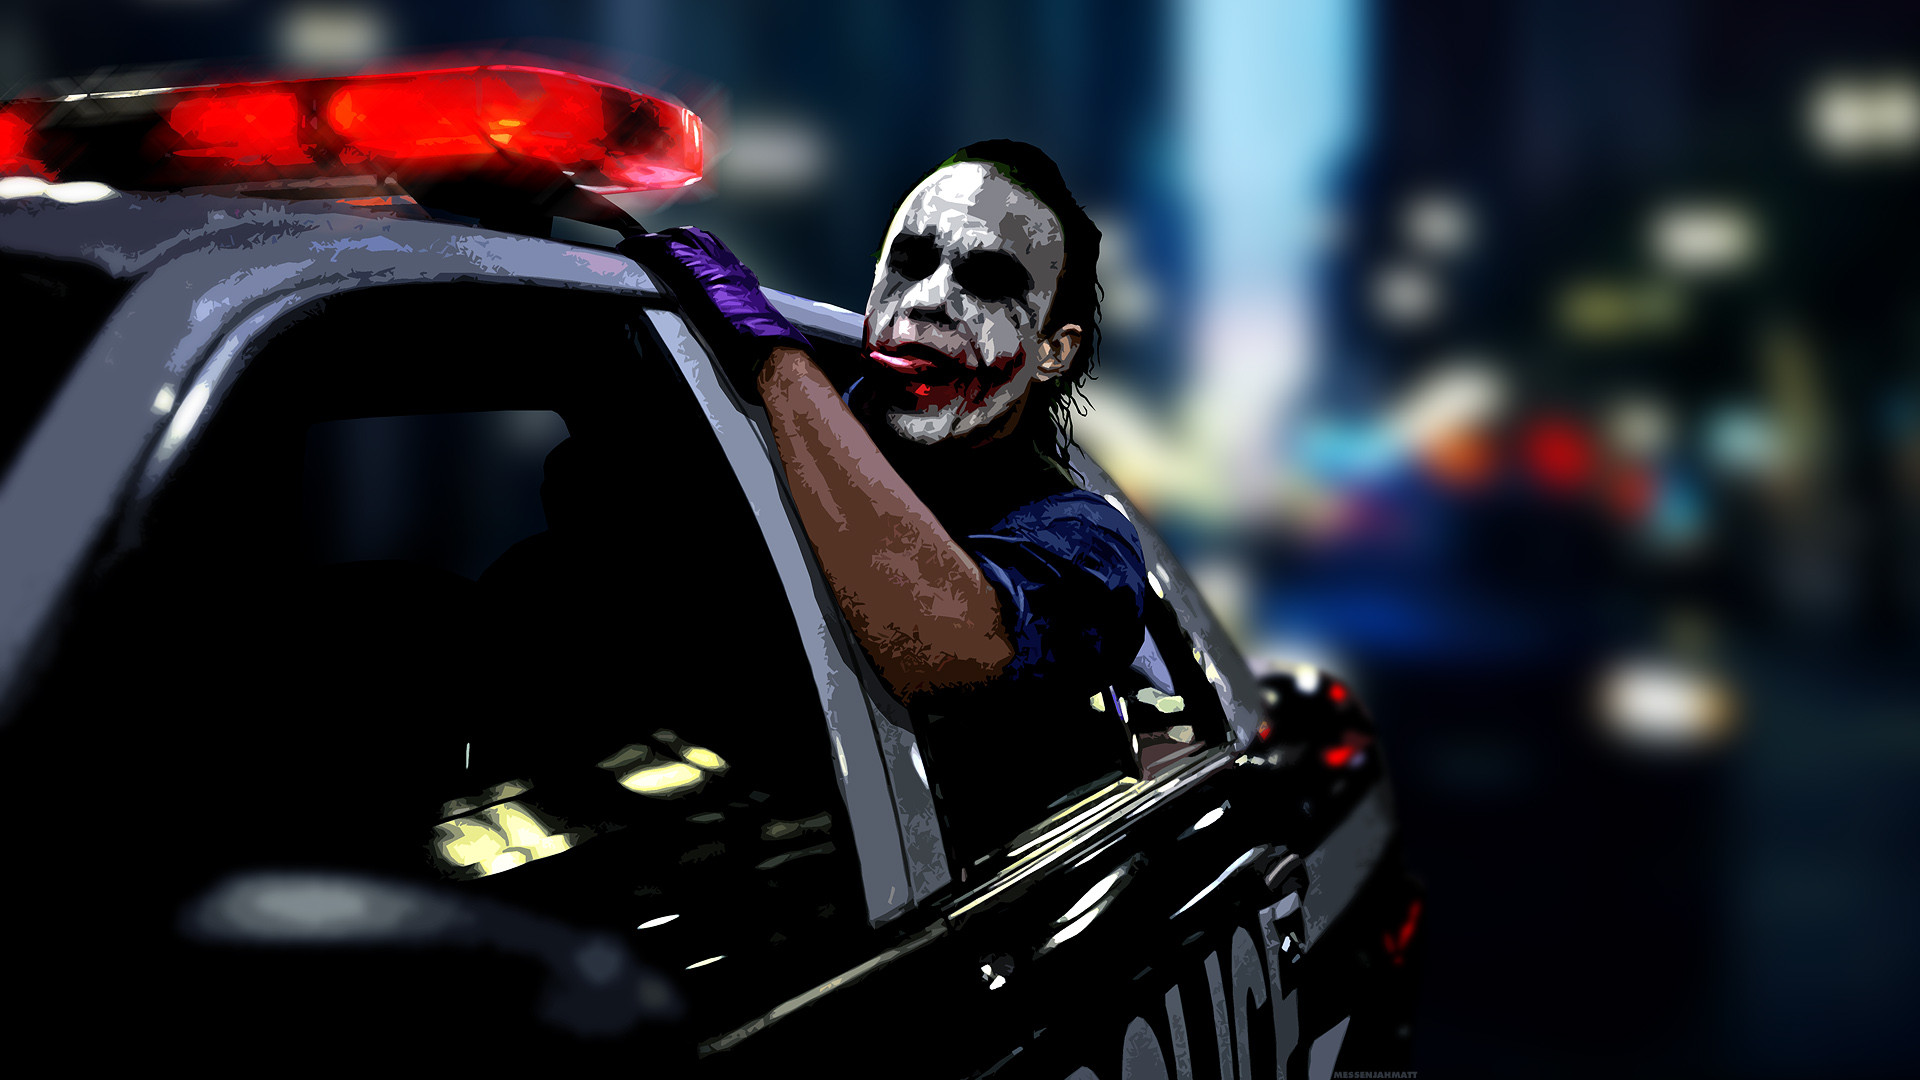 Joker In Police Car Poster Batman HD Wallpaper Of Jokerpicture For